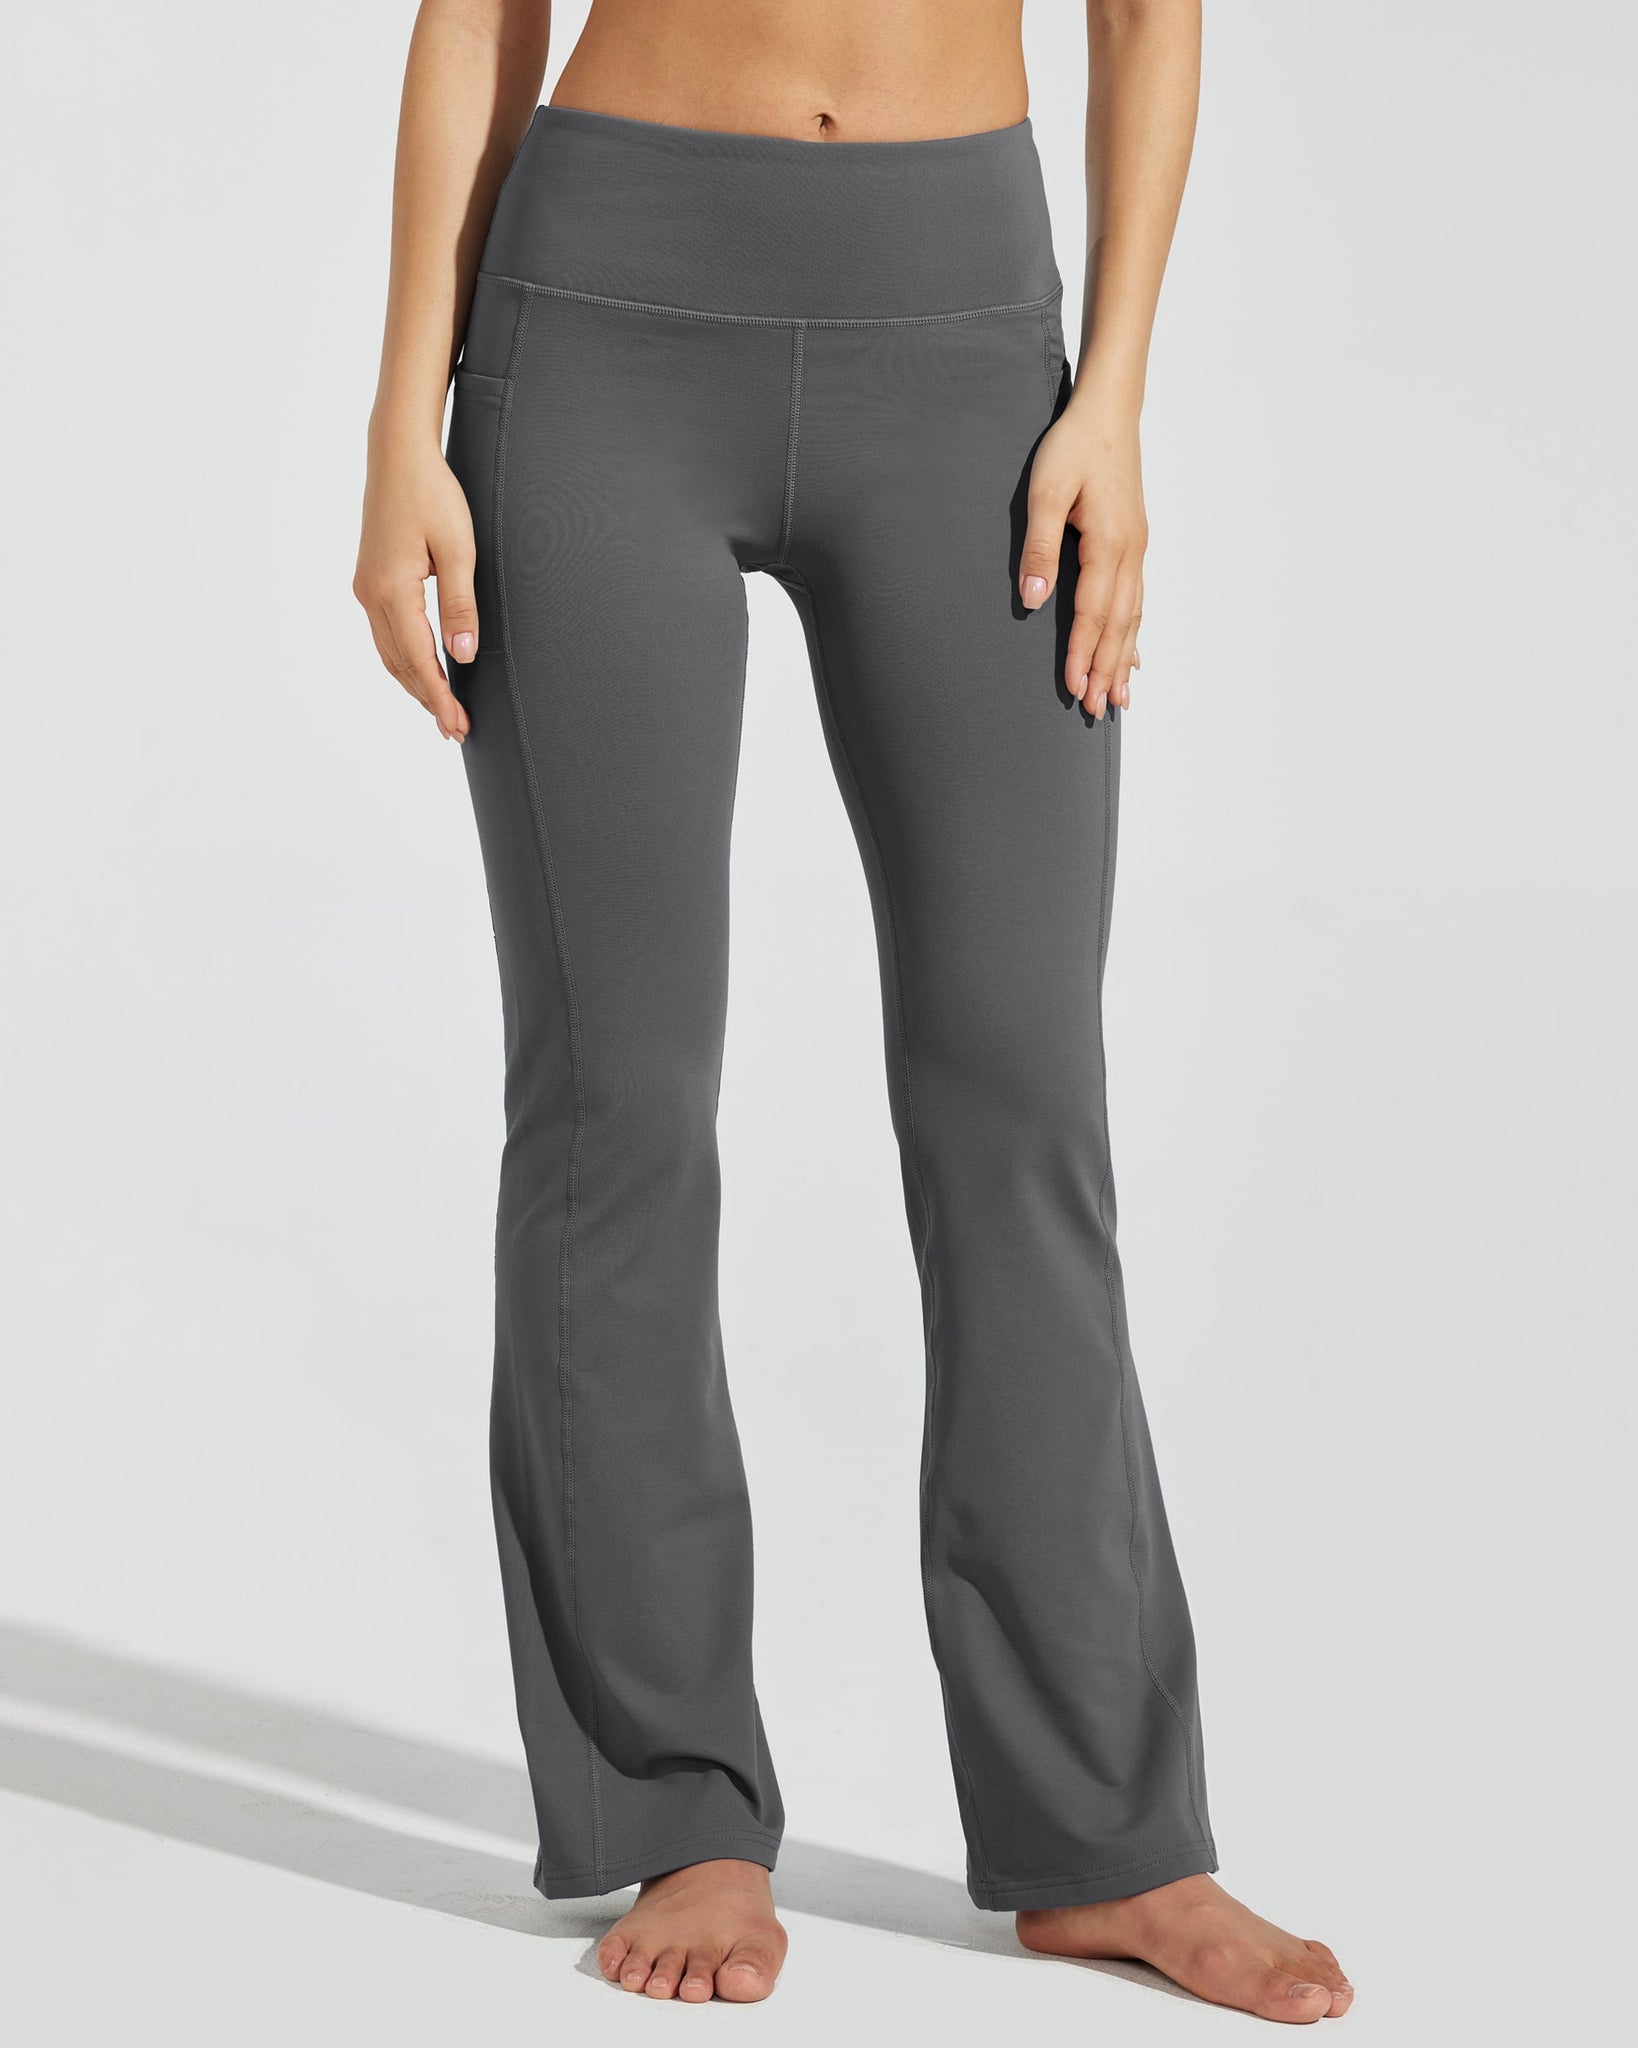 Women's Fleece Lined Bootcut Yoga Pants_Gray_model1